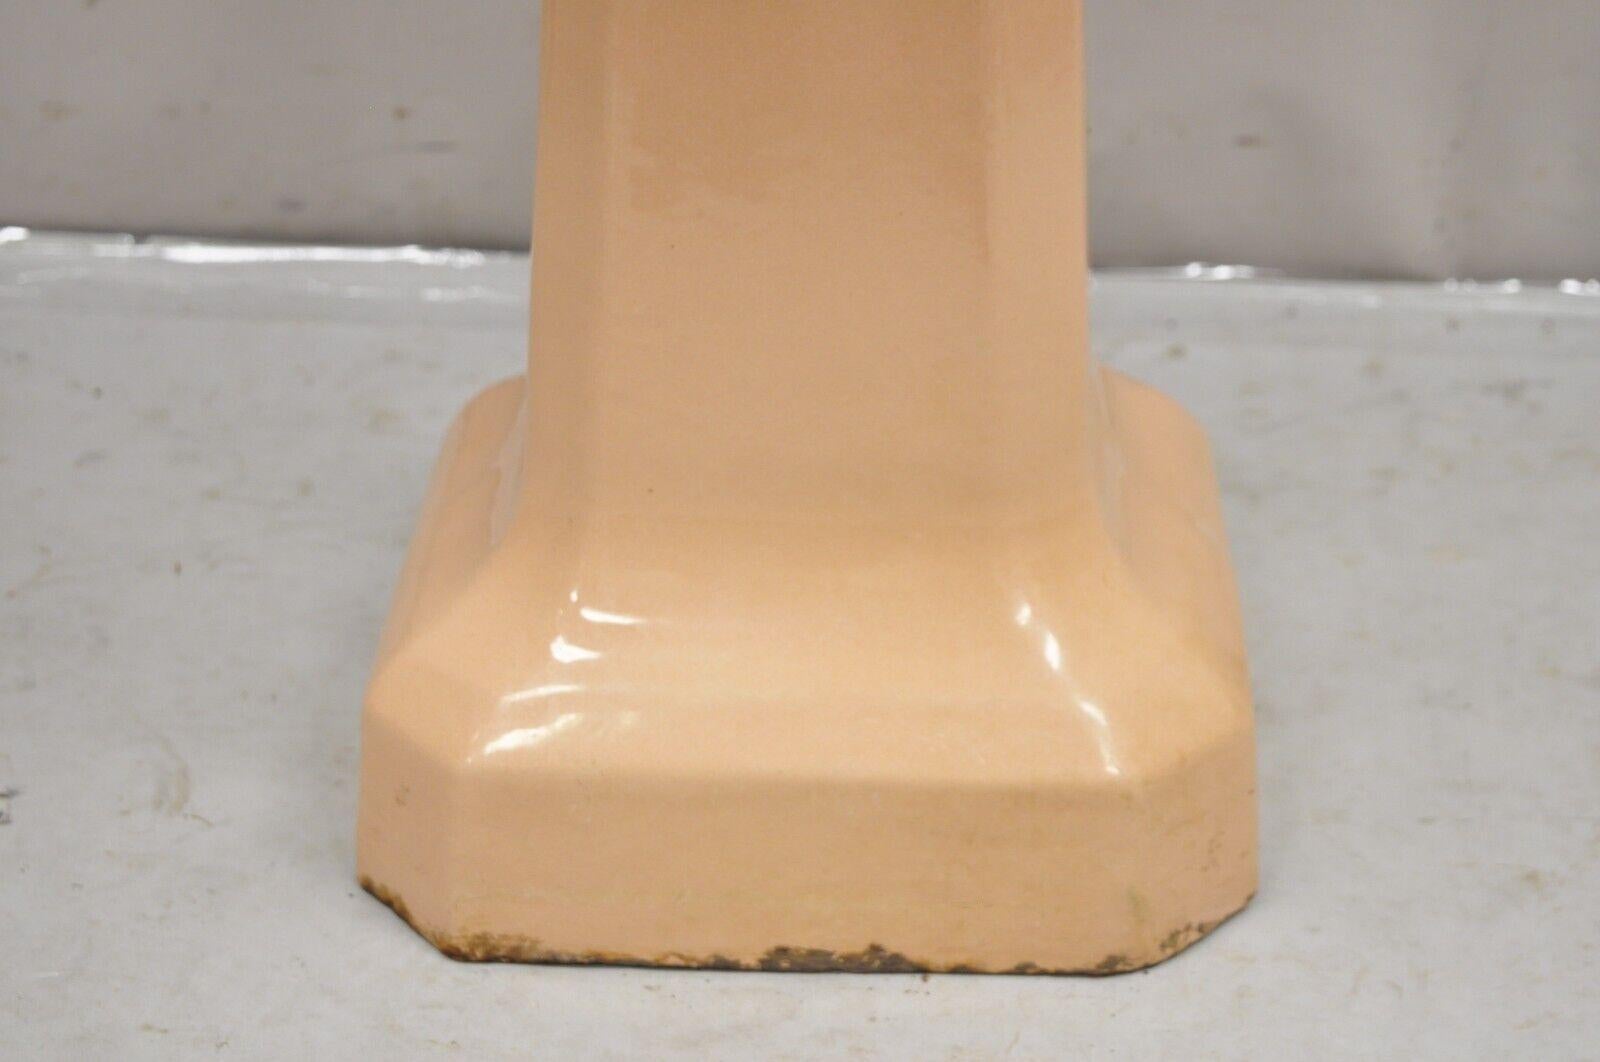 Vintage Mid Century Porcelain Enamel Salmon Pink Bathroom Pedestal Sink In Good Condition For Sale In Philadelphia, PA